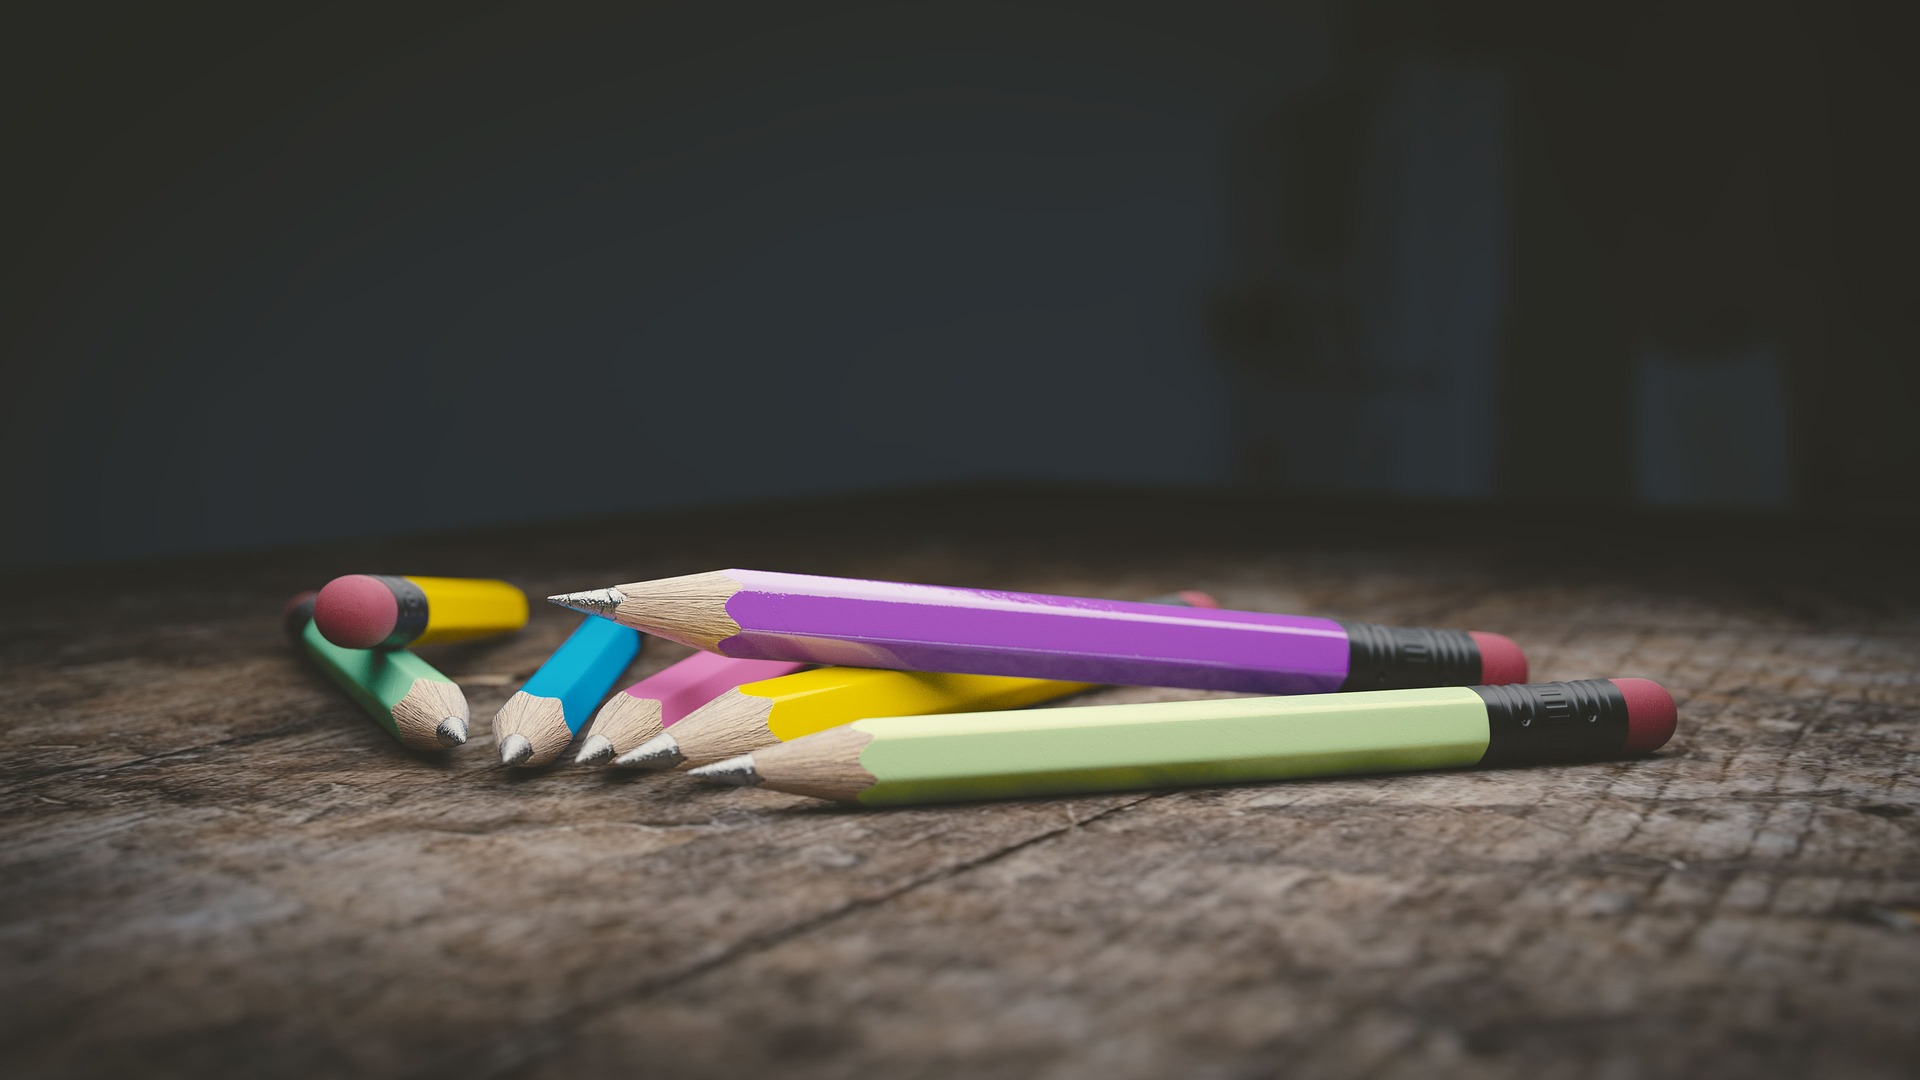 Art Plug Pencils Sharpener Drawing Tools for Artists Sponge Erasers  Blending Sticks Plastic + Brush Child Charcoal - AliExpress